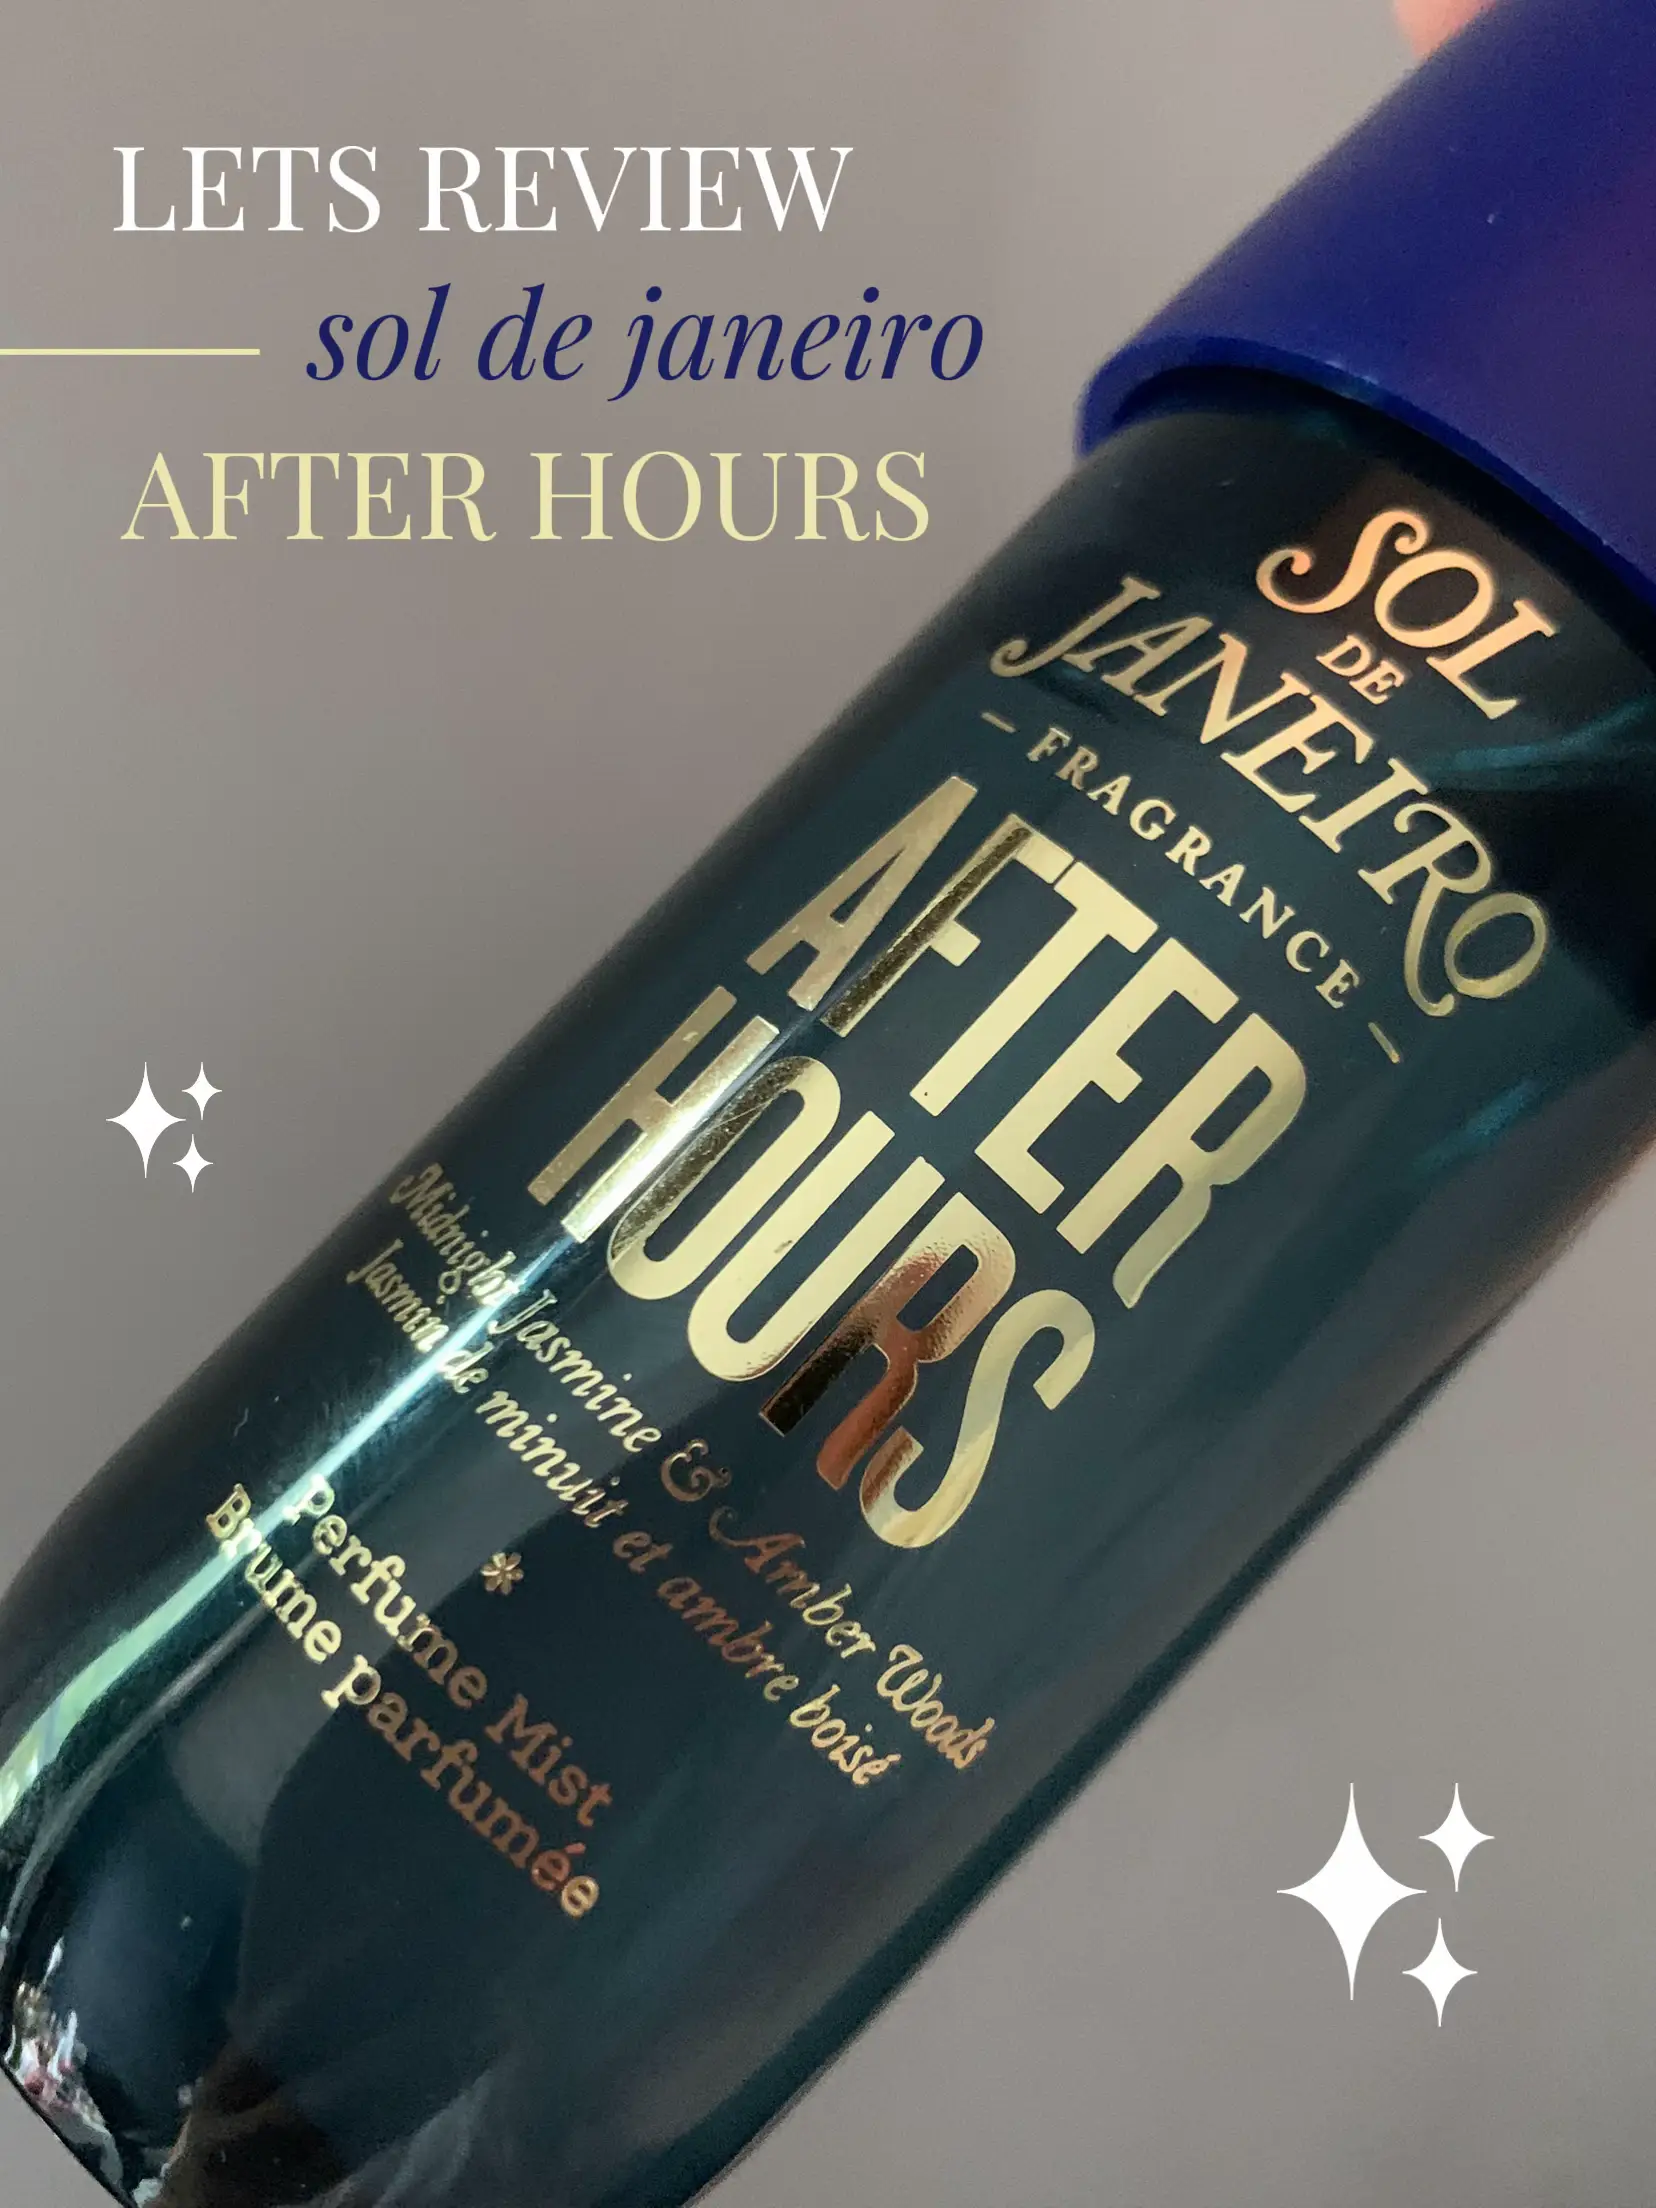 SOL DE JANEIRO After Hours Limited Edition Perfume Mist Brume Parfumée